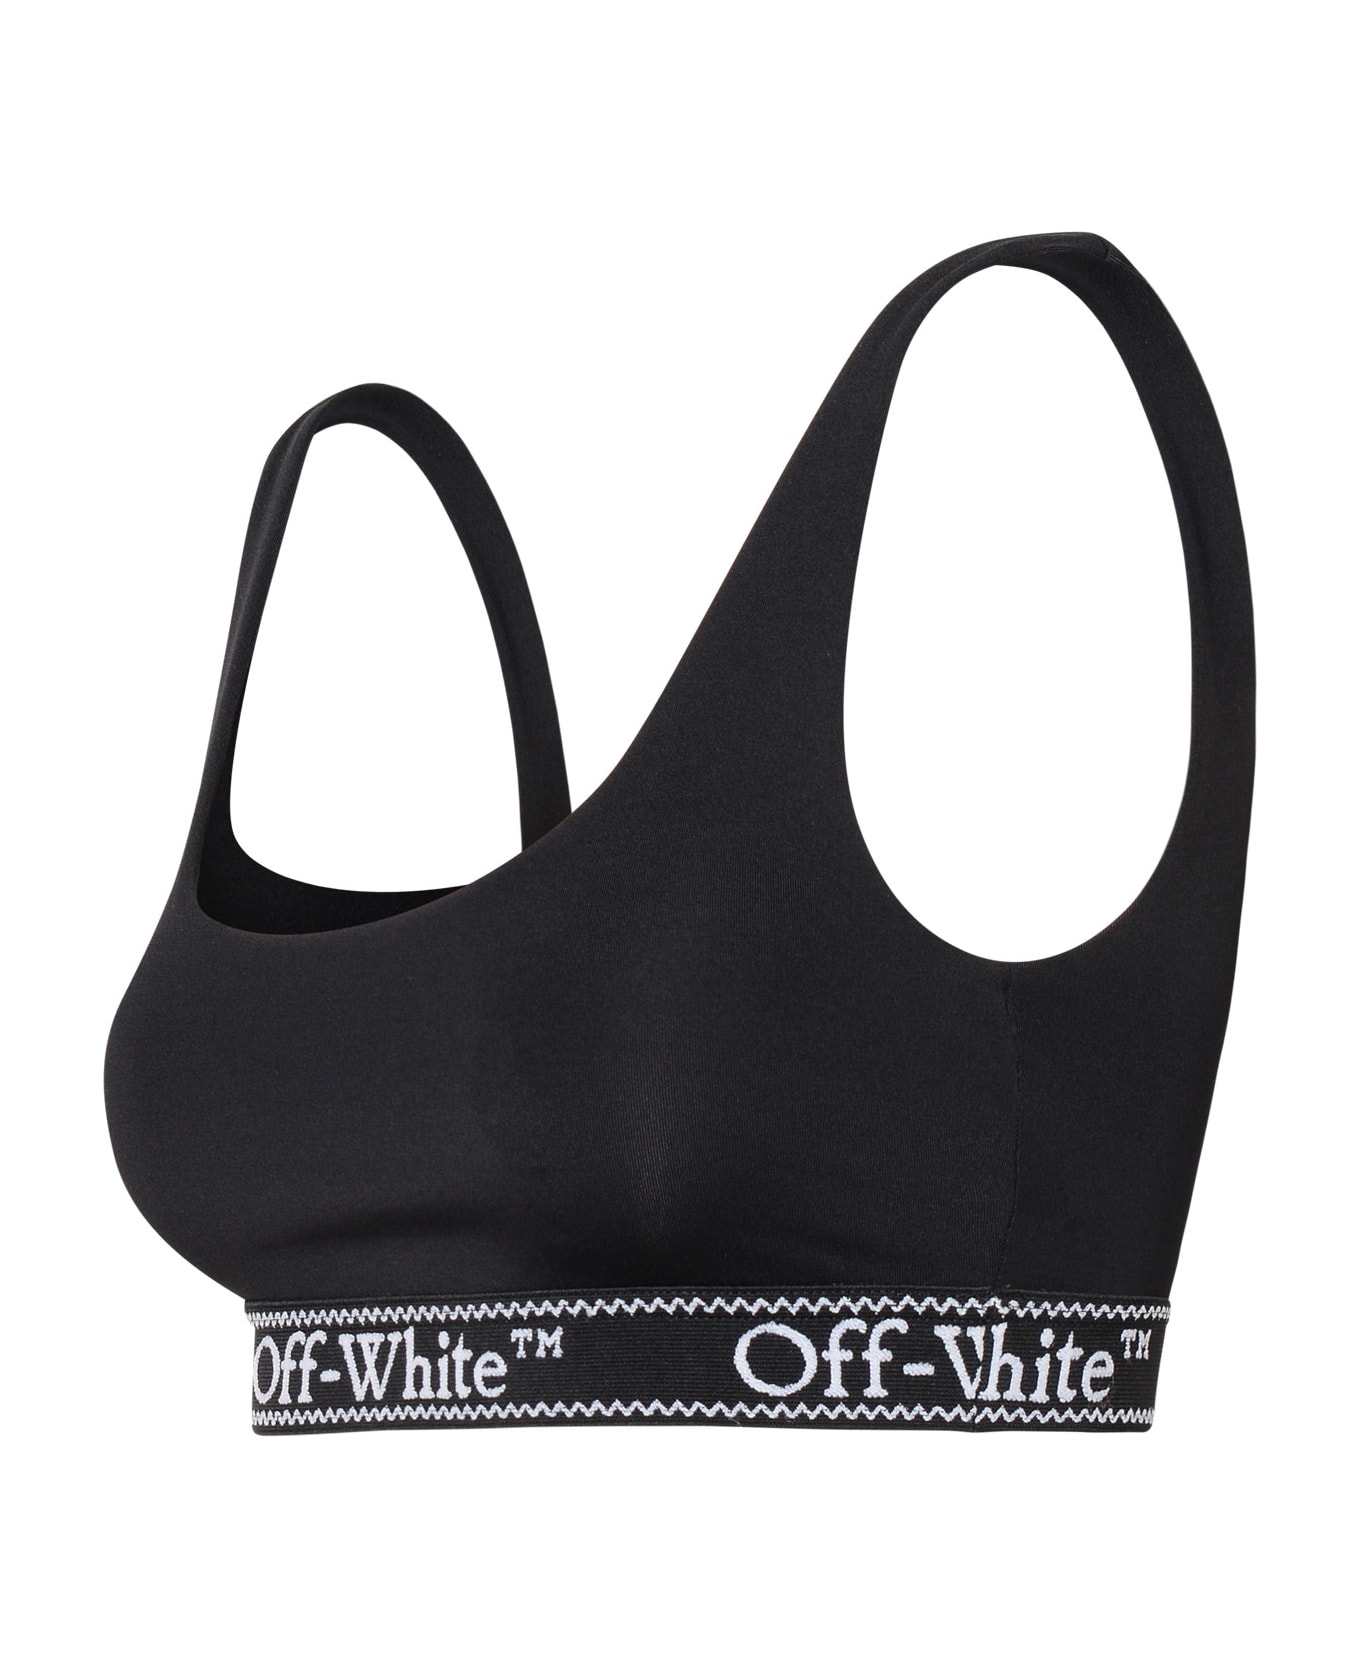 Off-White Sporty Top In Black Nylon Blend - Black White